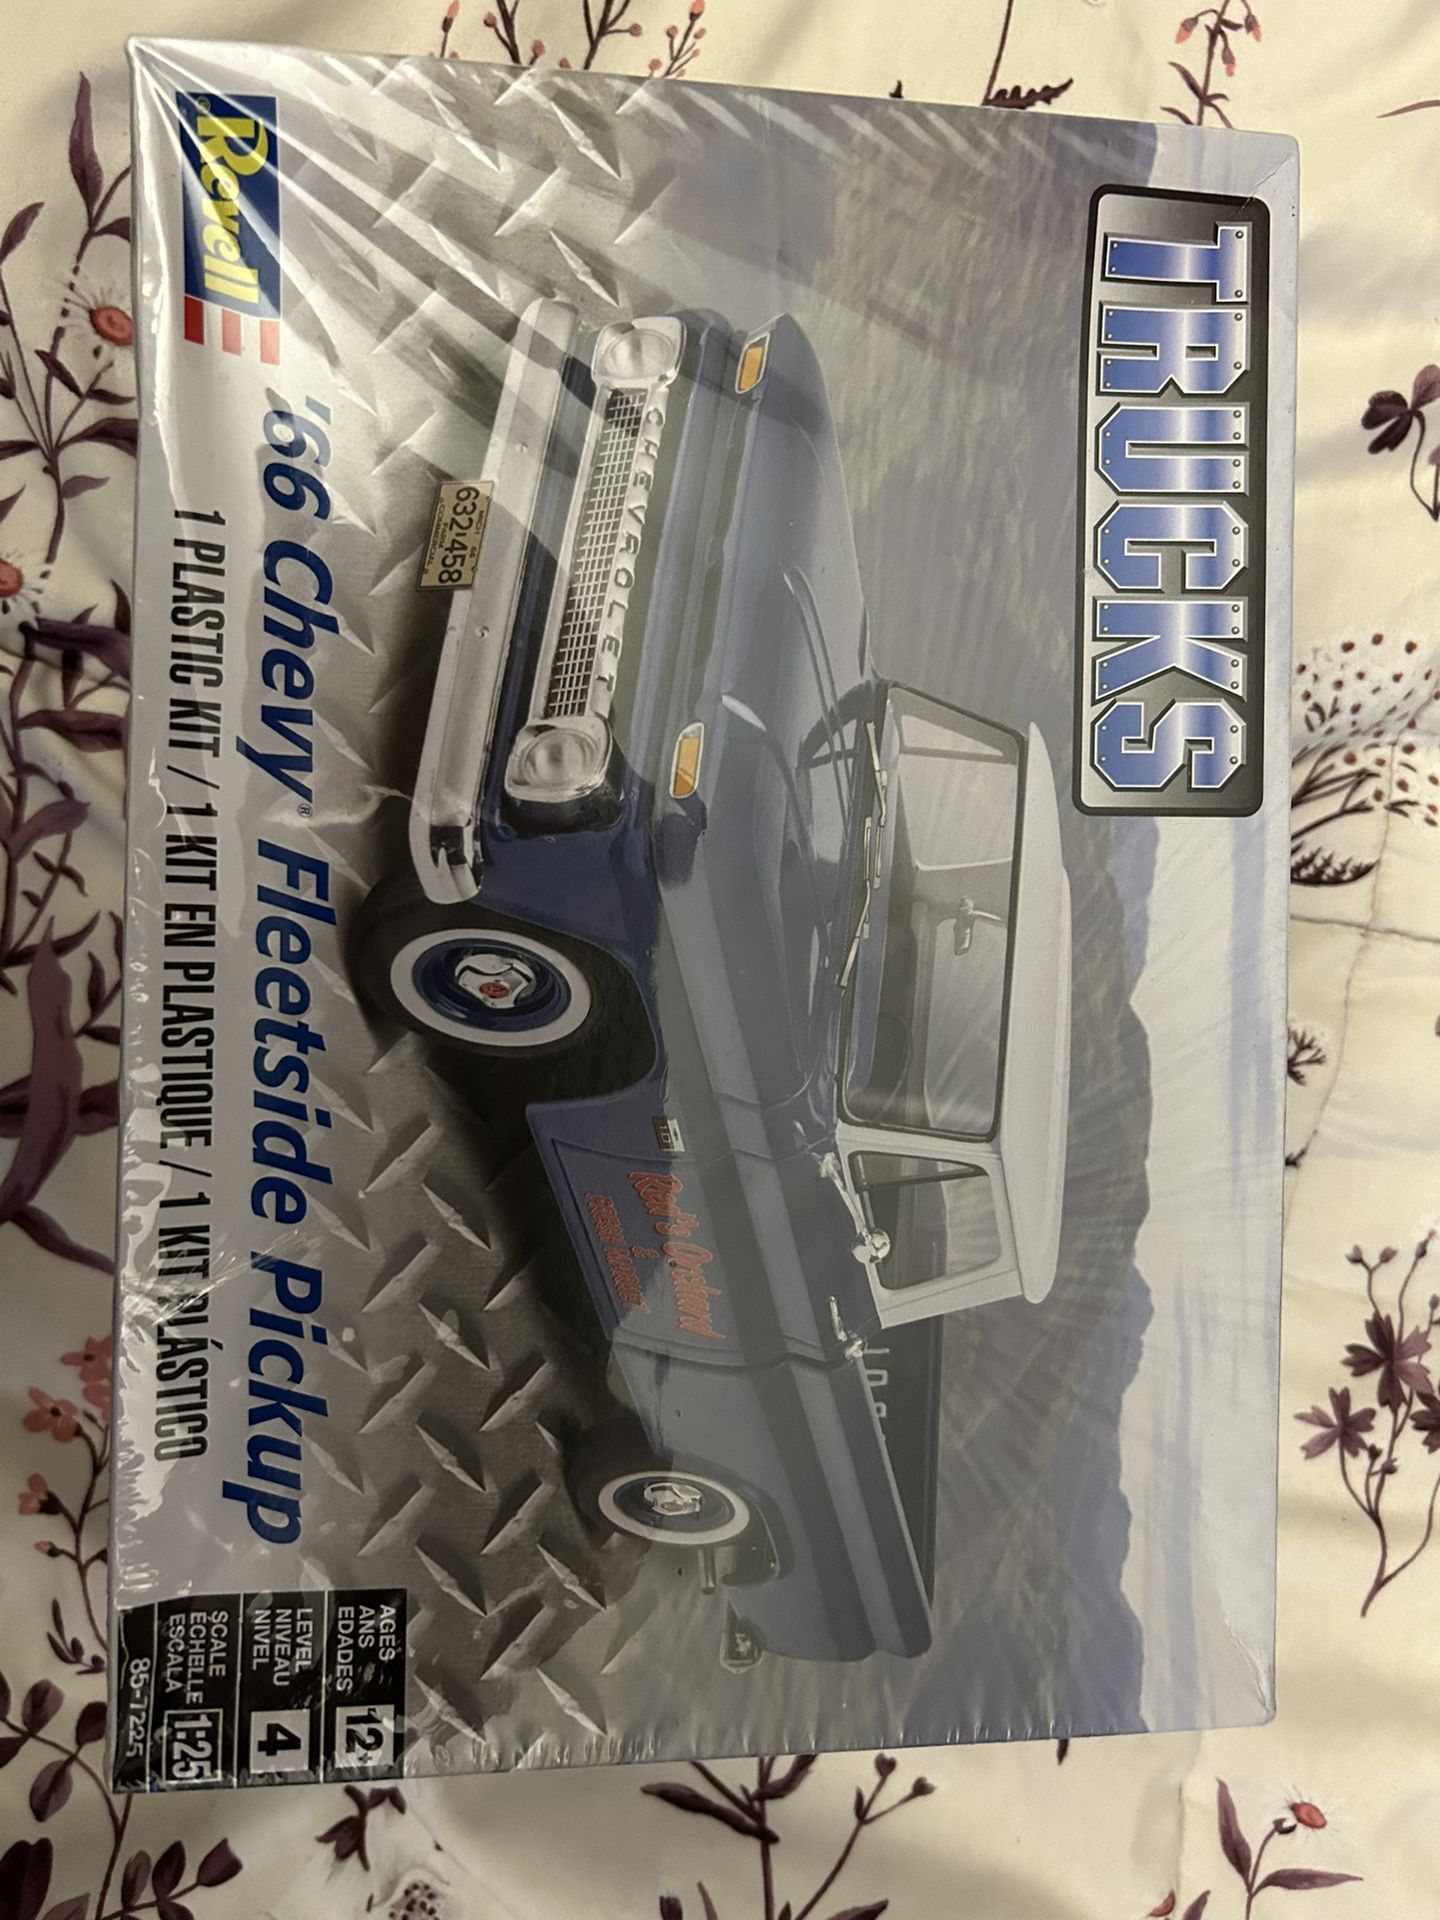 Chevy Model Kit